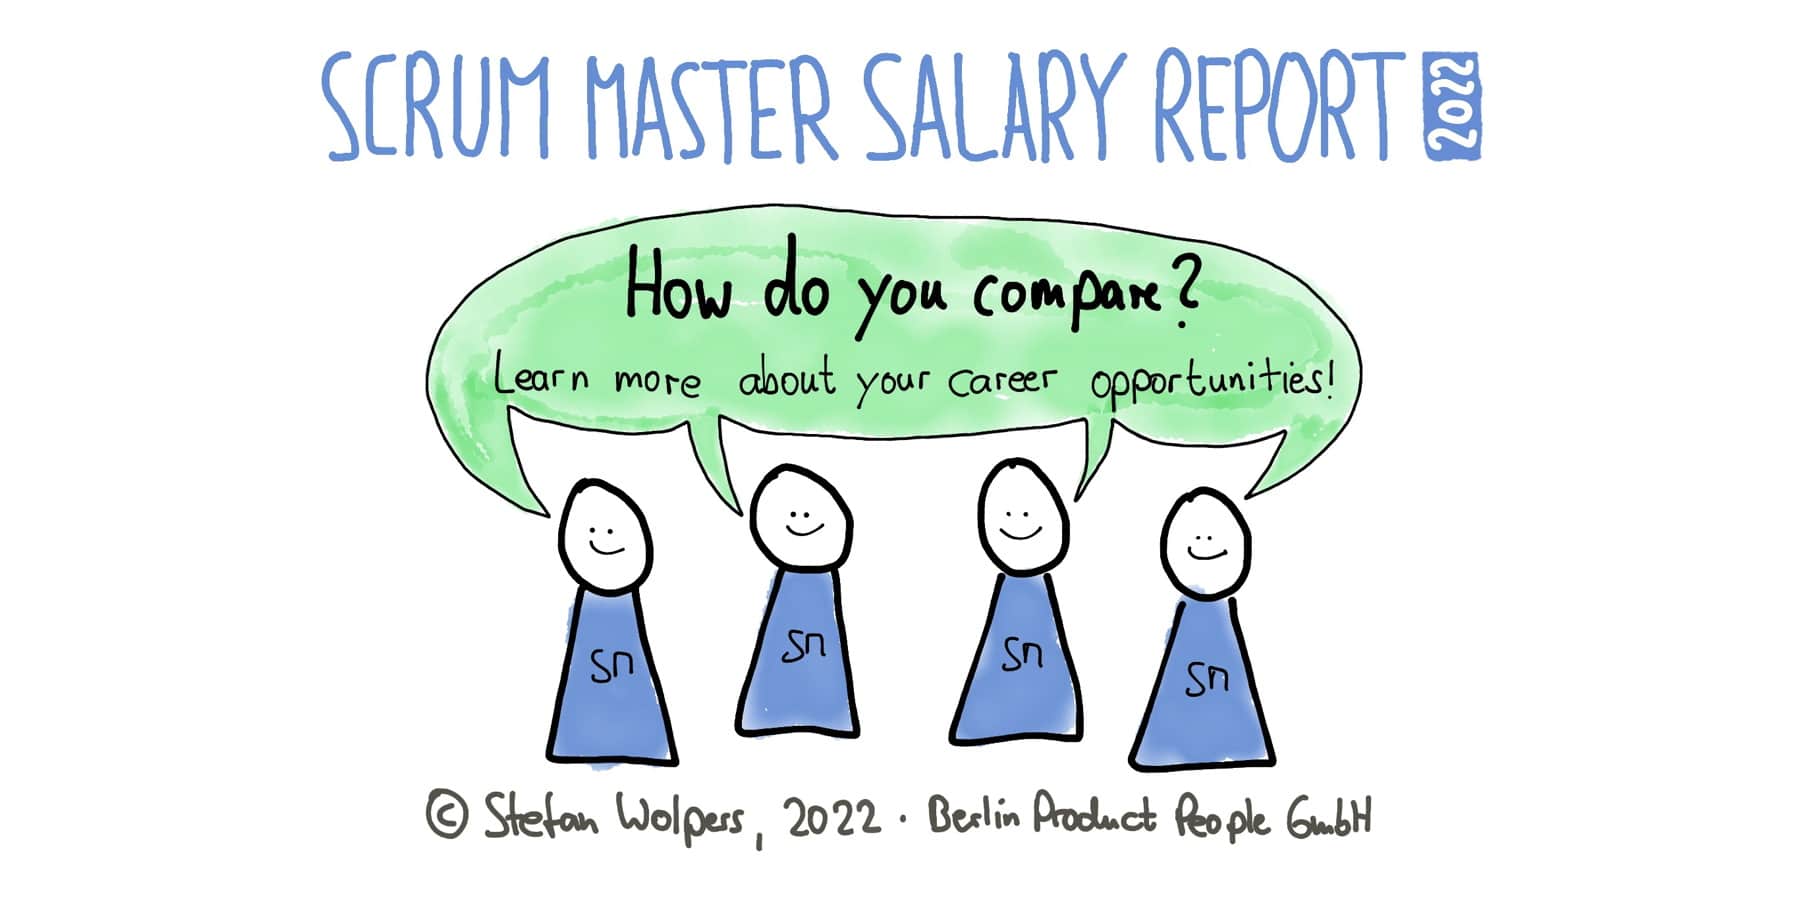 Scrum Master Salary Report 2022 — Berlin Product People GmbH